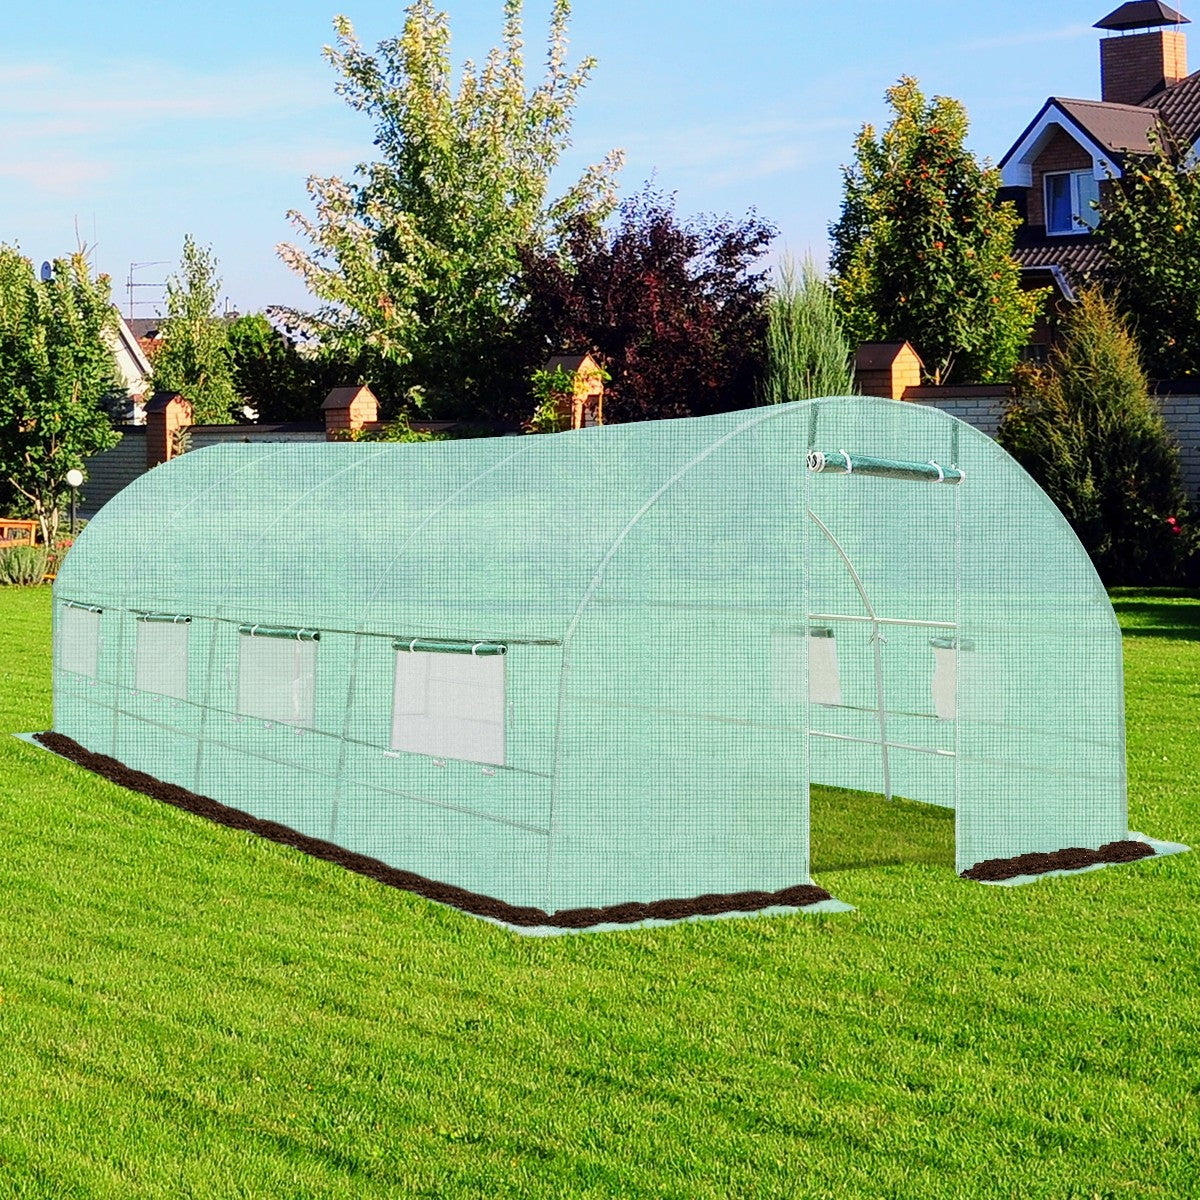 10' x 6.5' x 20' Backyard Portable Walk-in Greenhouse with 8 Windows